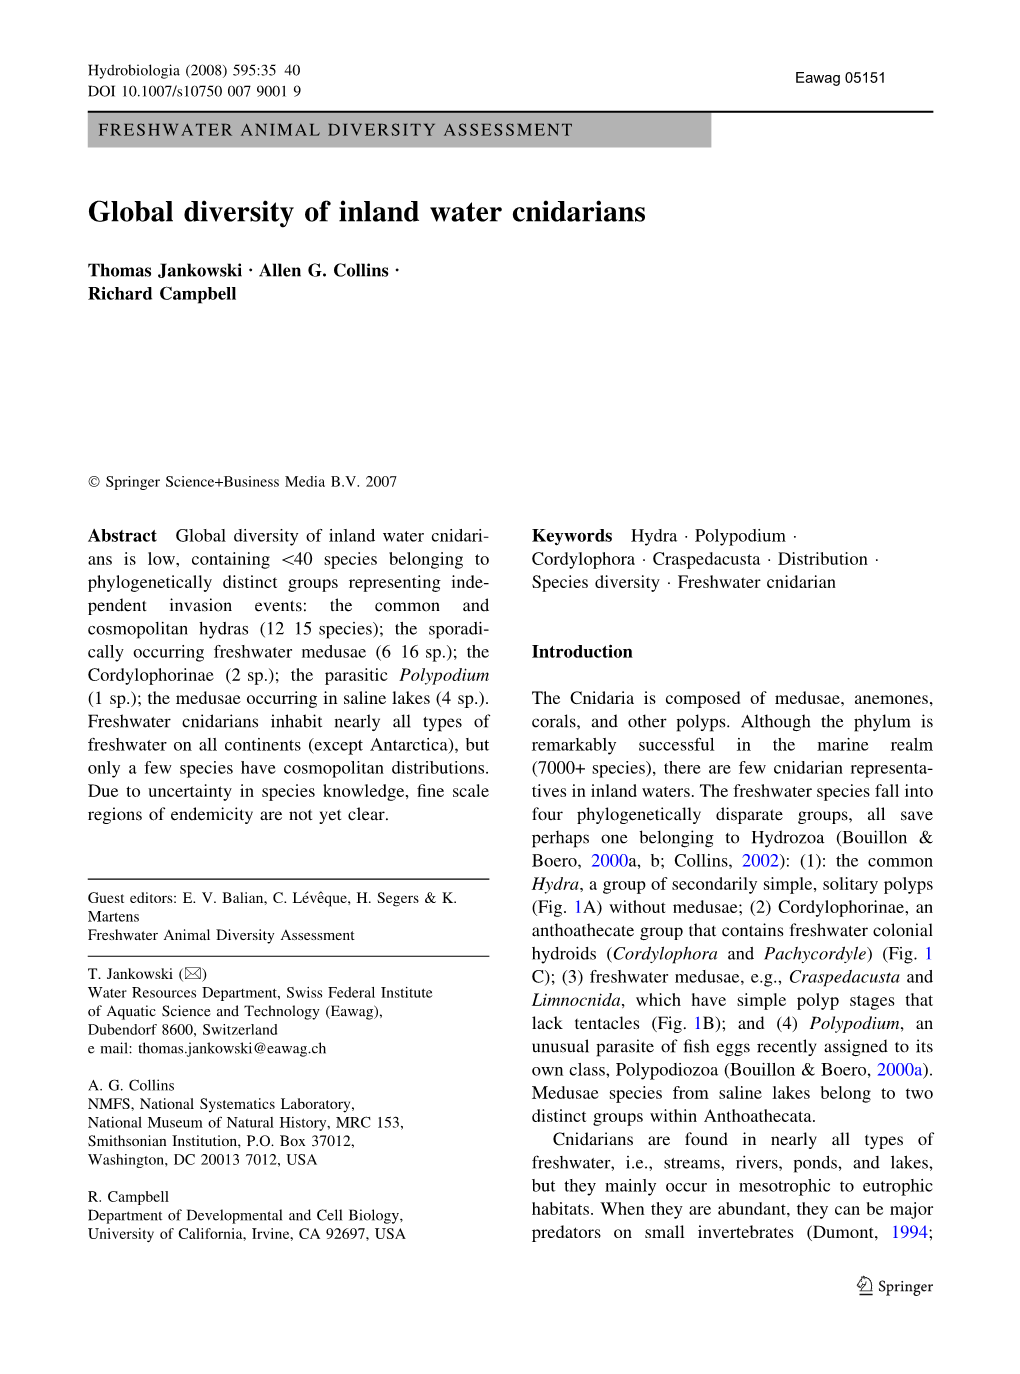 Global Diversity of Inland Water Cnidarians